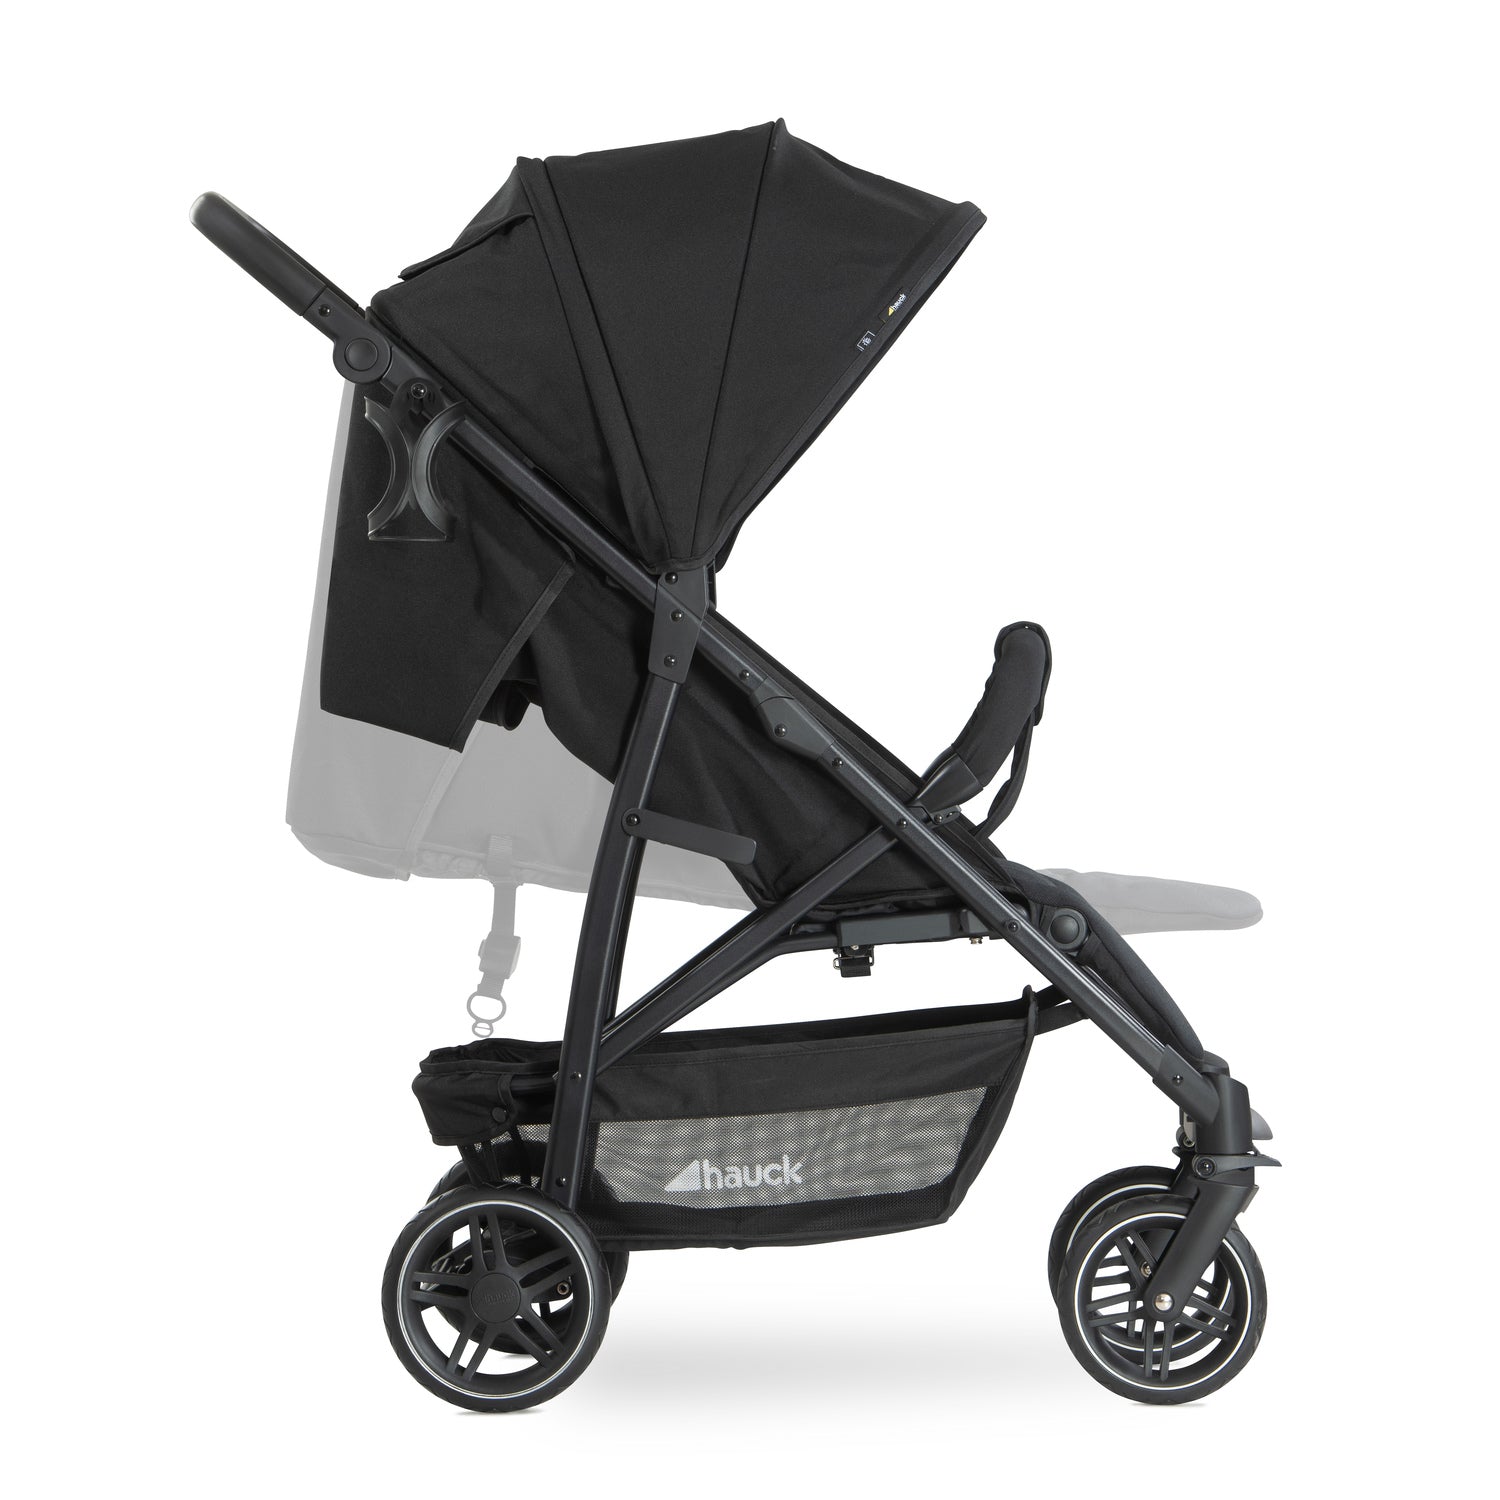 hauck rapid 4r stroller black adjustable seat